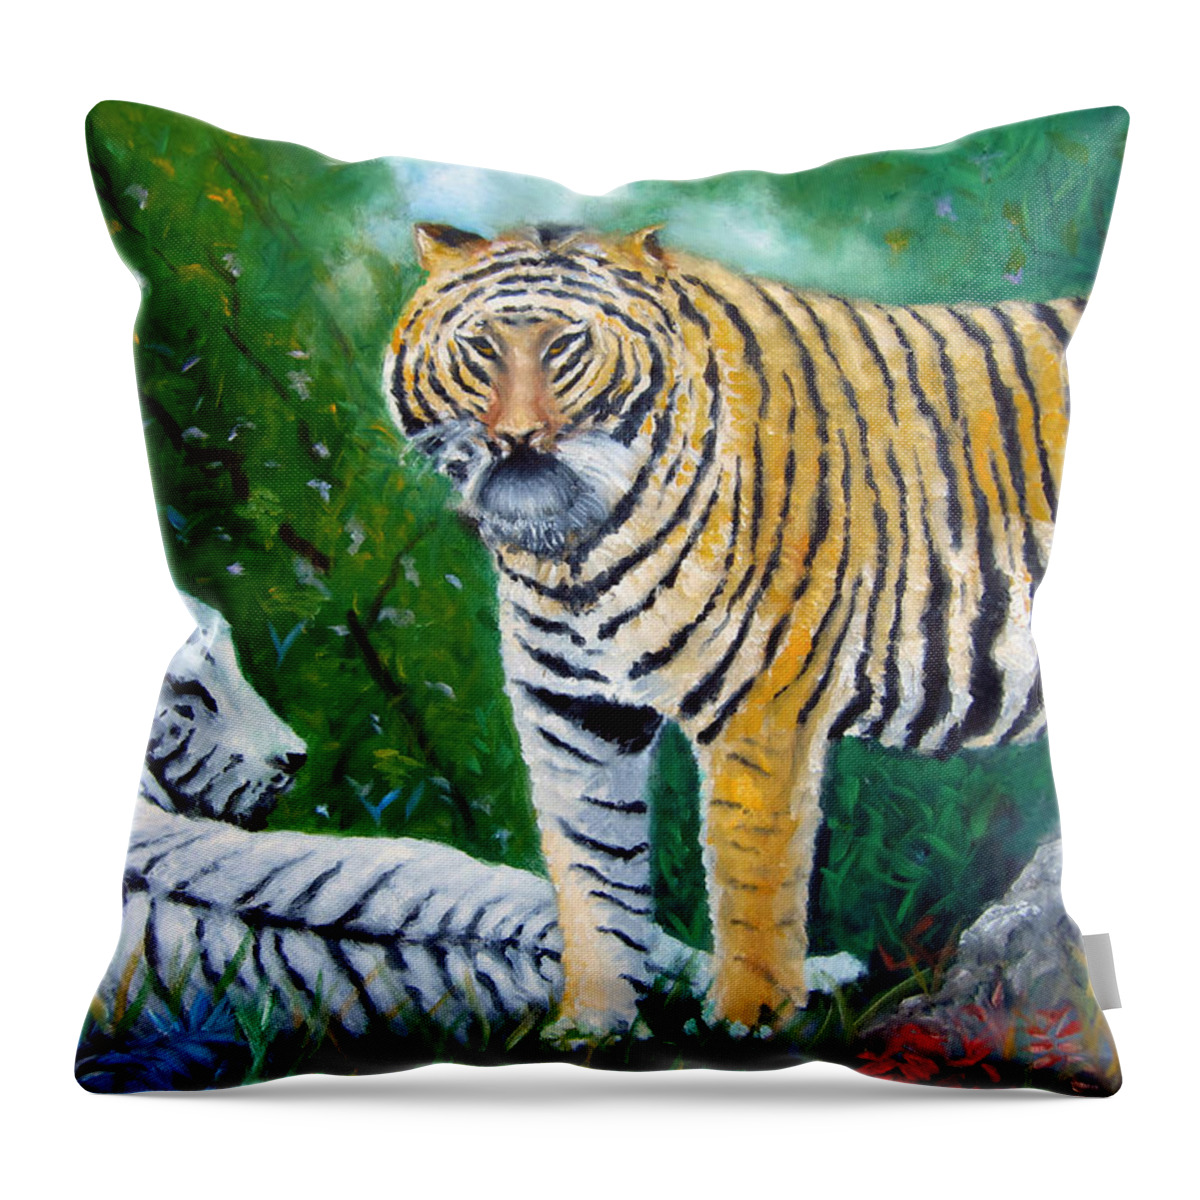 Tigers Throw Pillow featuring the painting Jungle Vigilance by Leonardo Ruggieri